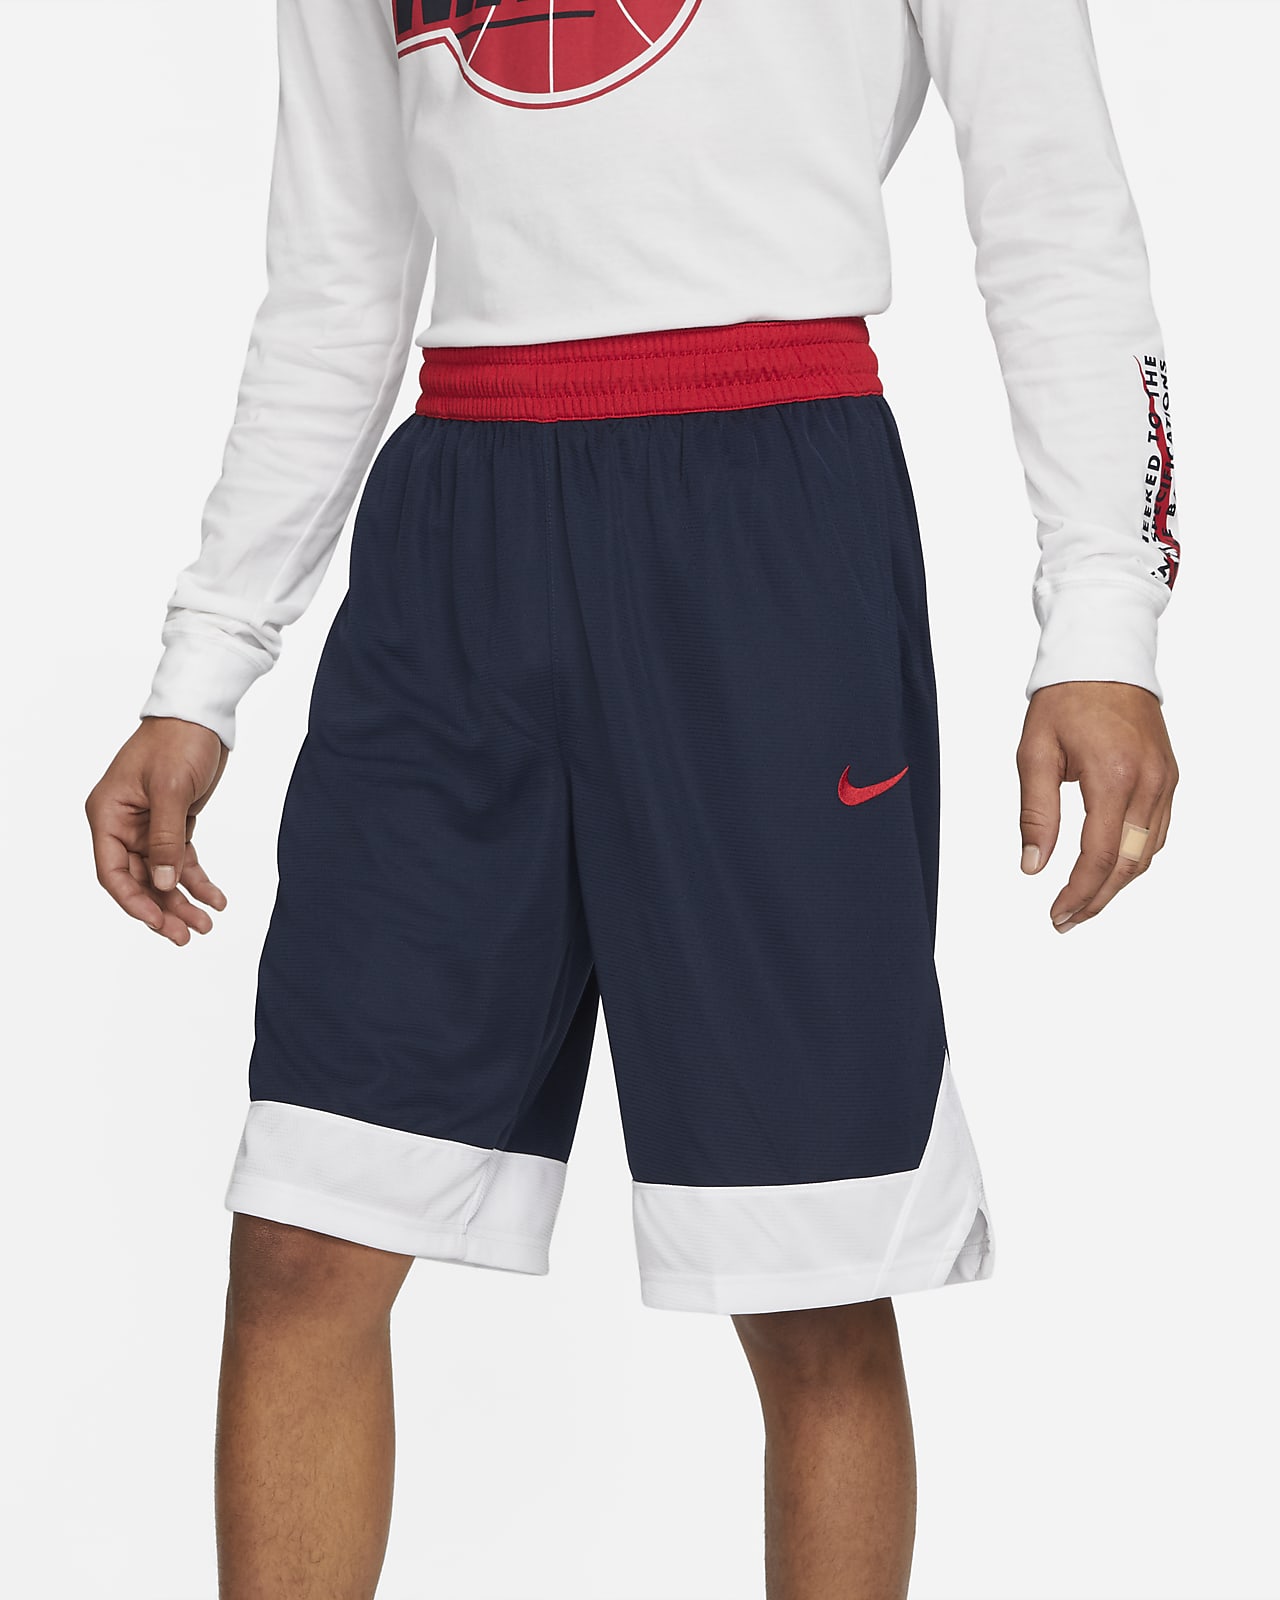 men's basketball shorts sale